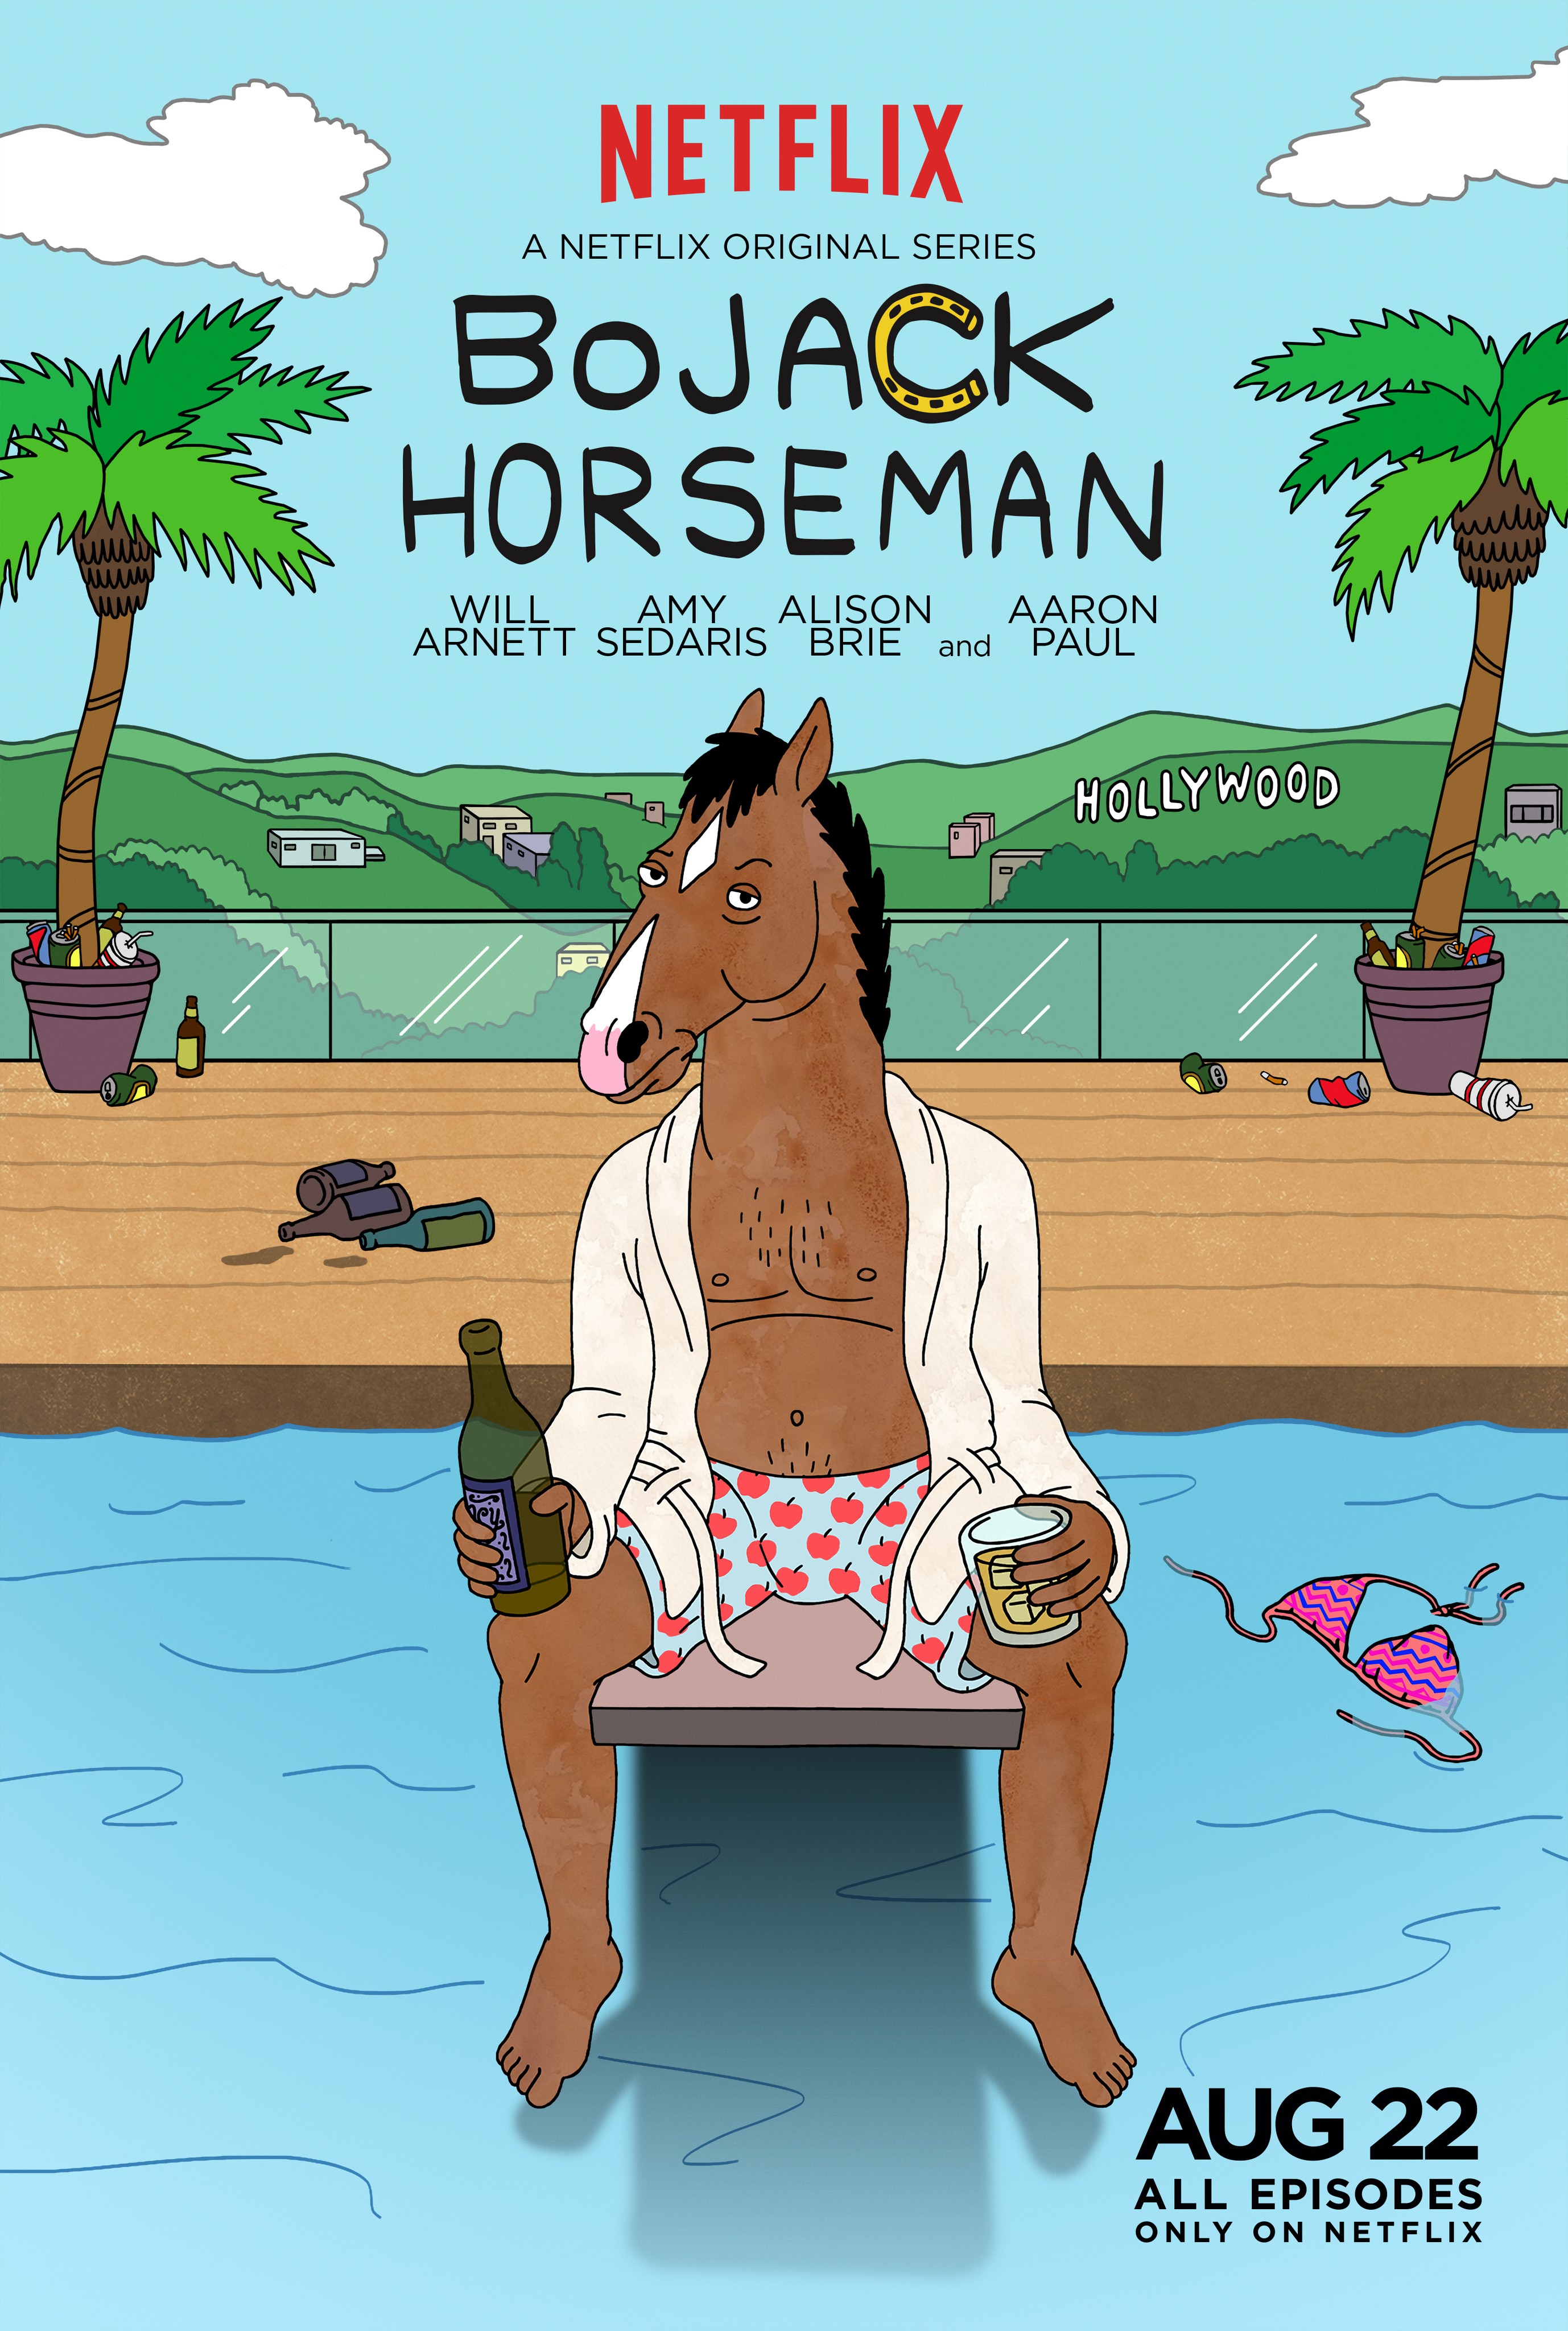 BoJack Horseman: Season 1